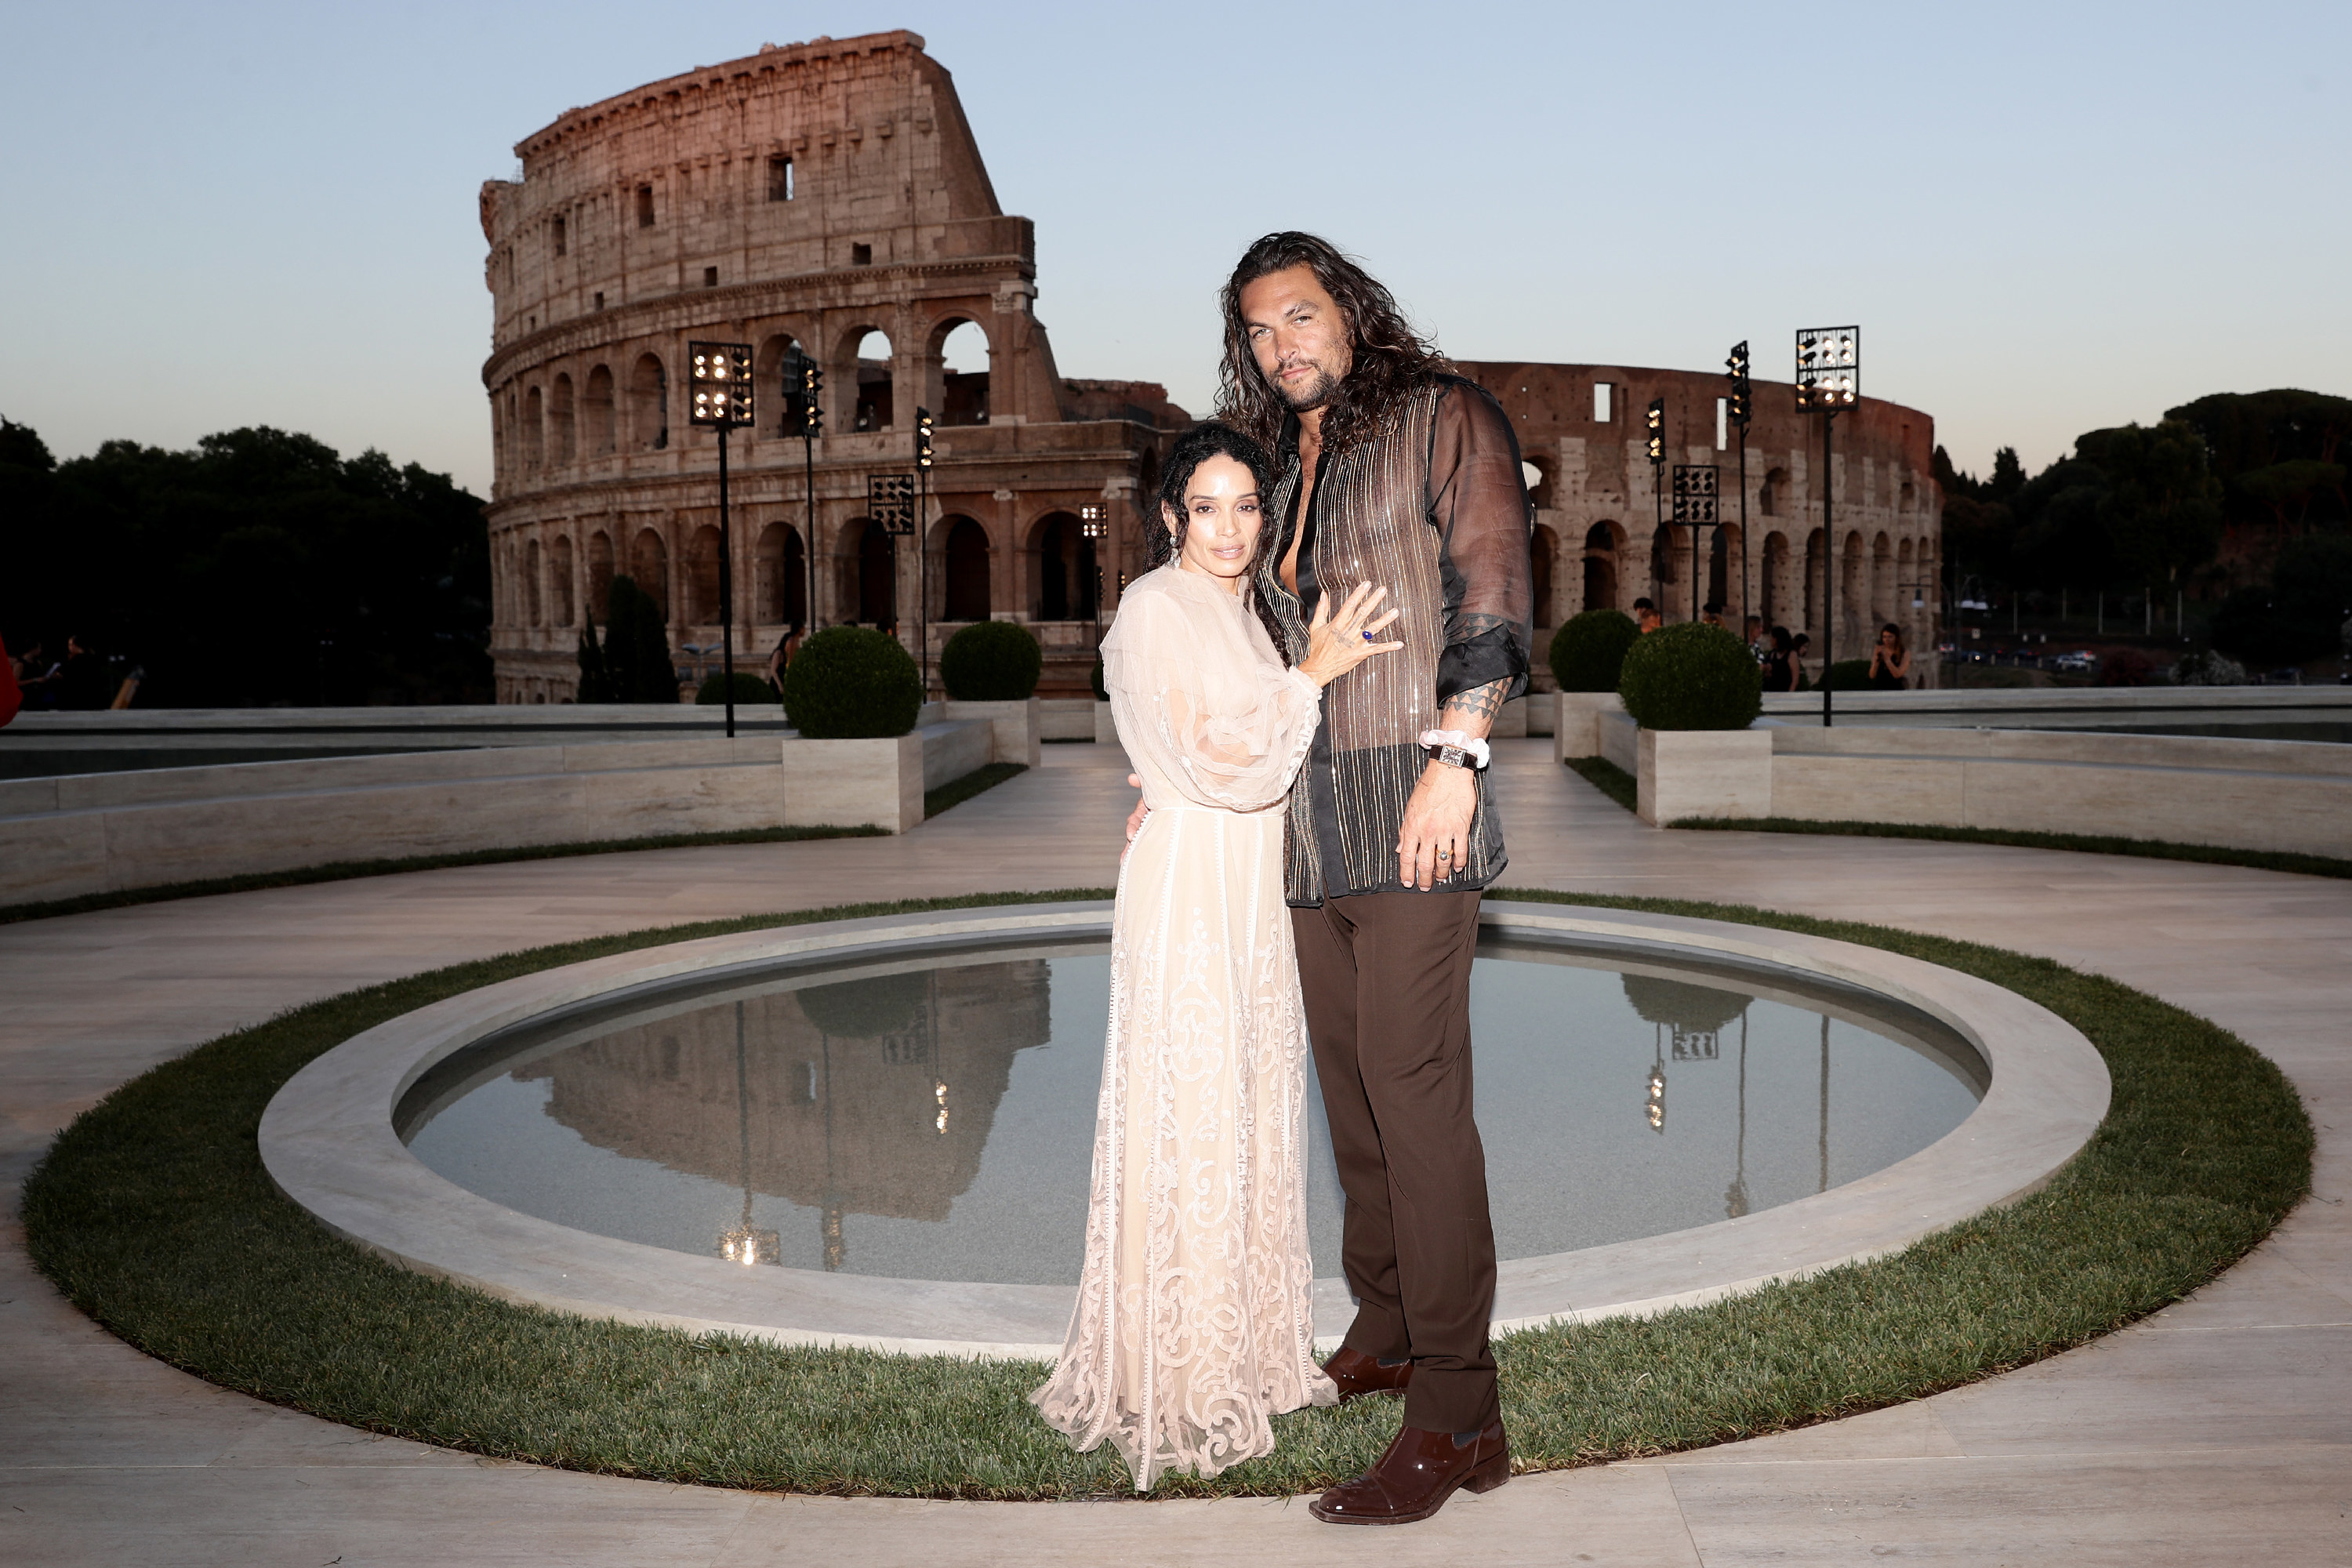 Jason Momoa and Lisa Bonet pose in front of the Coliseum